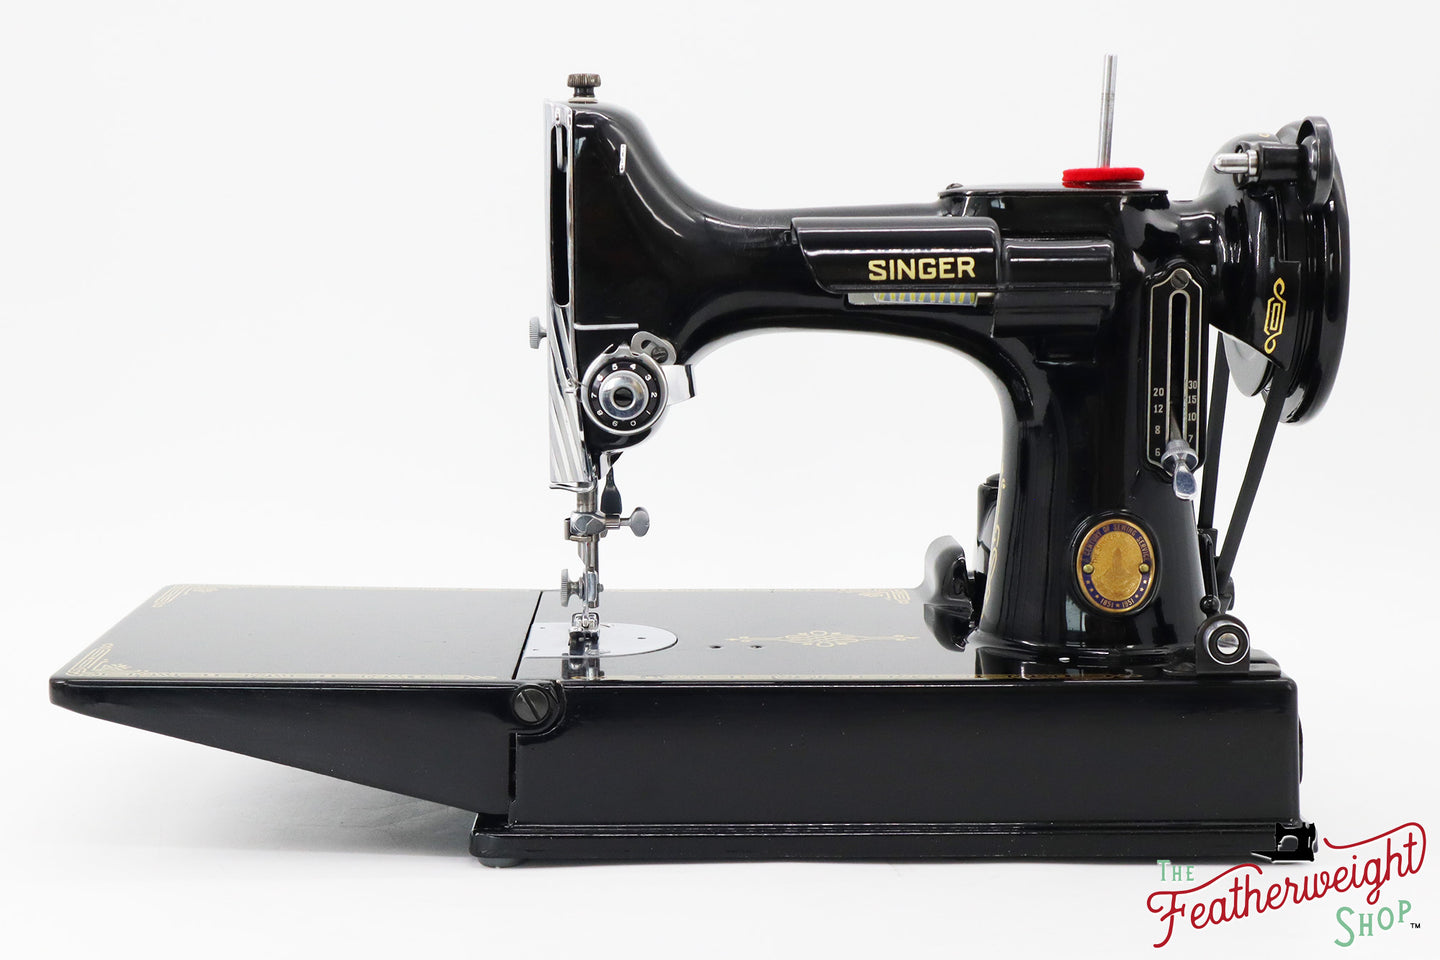 Singer Featherweight 221 Sewing Machine, Centennial: AK117***